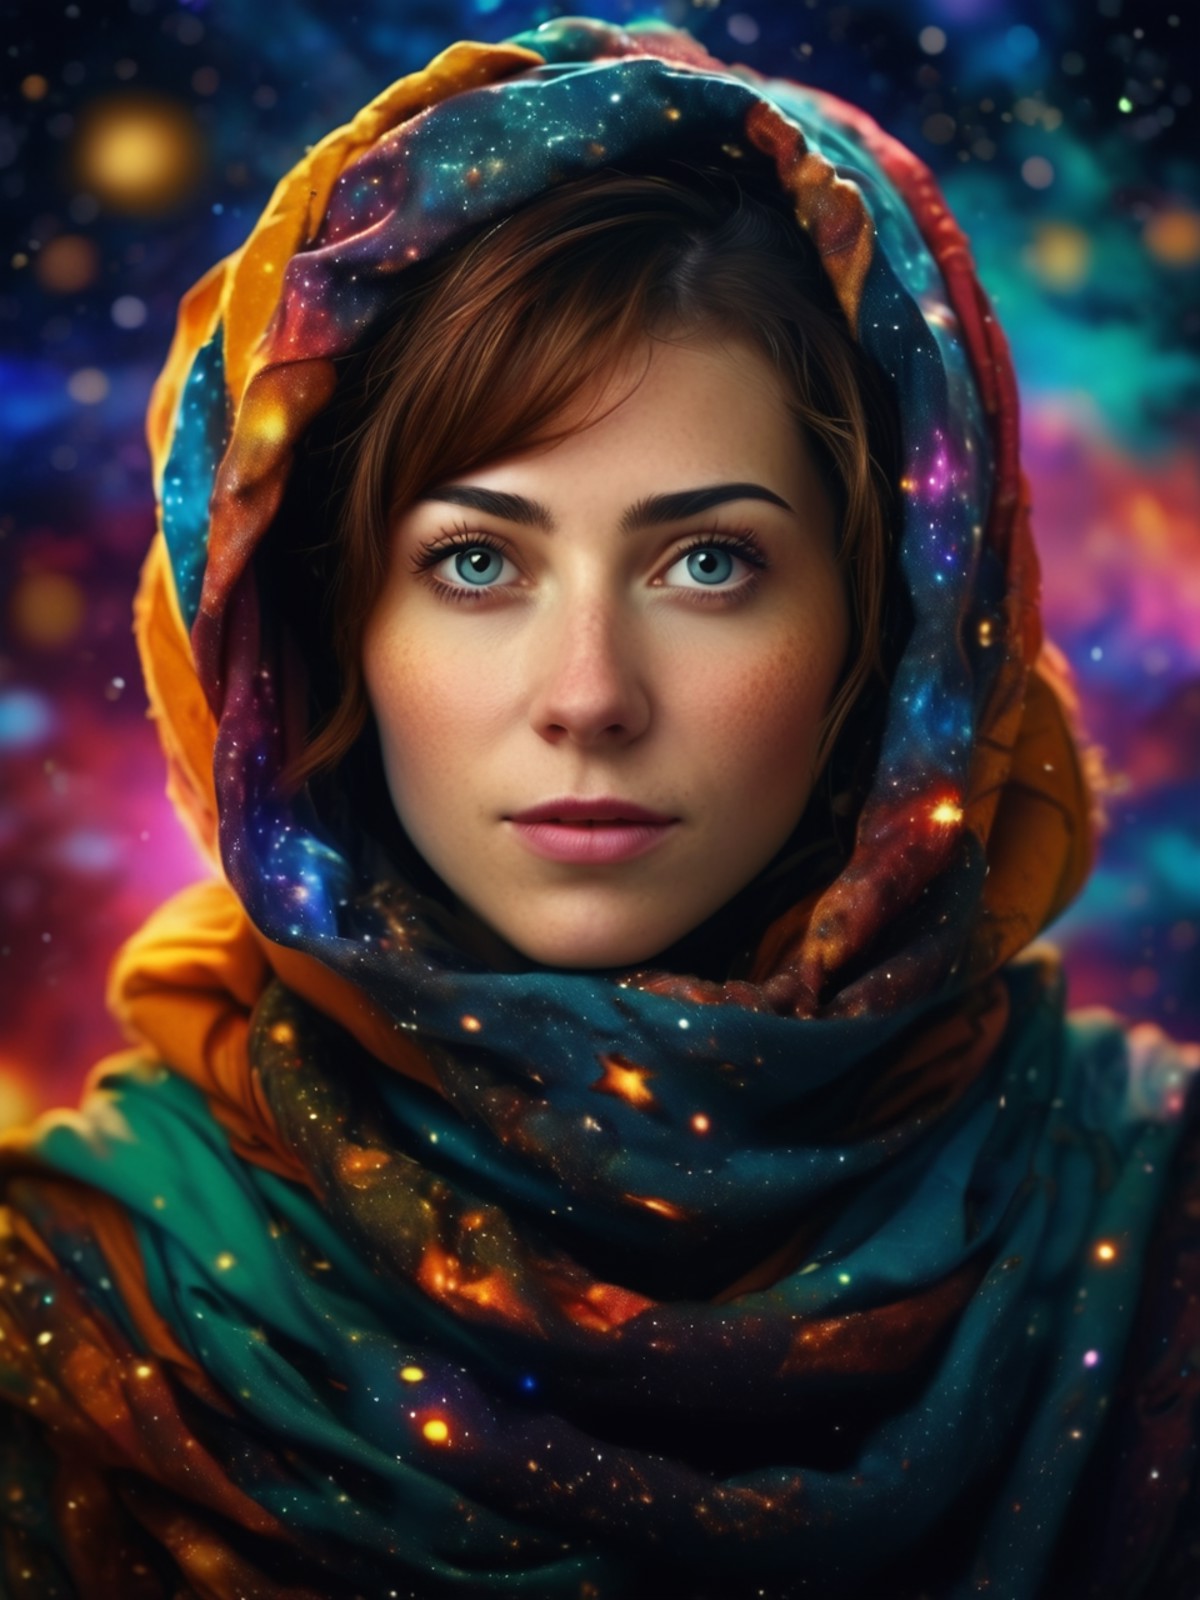 beautiful (afghan woman) in space, galaxy, waist up shot, colorful, stars, nebula, artistic, piercing eyes, (headscarf), m...